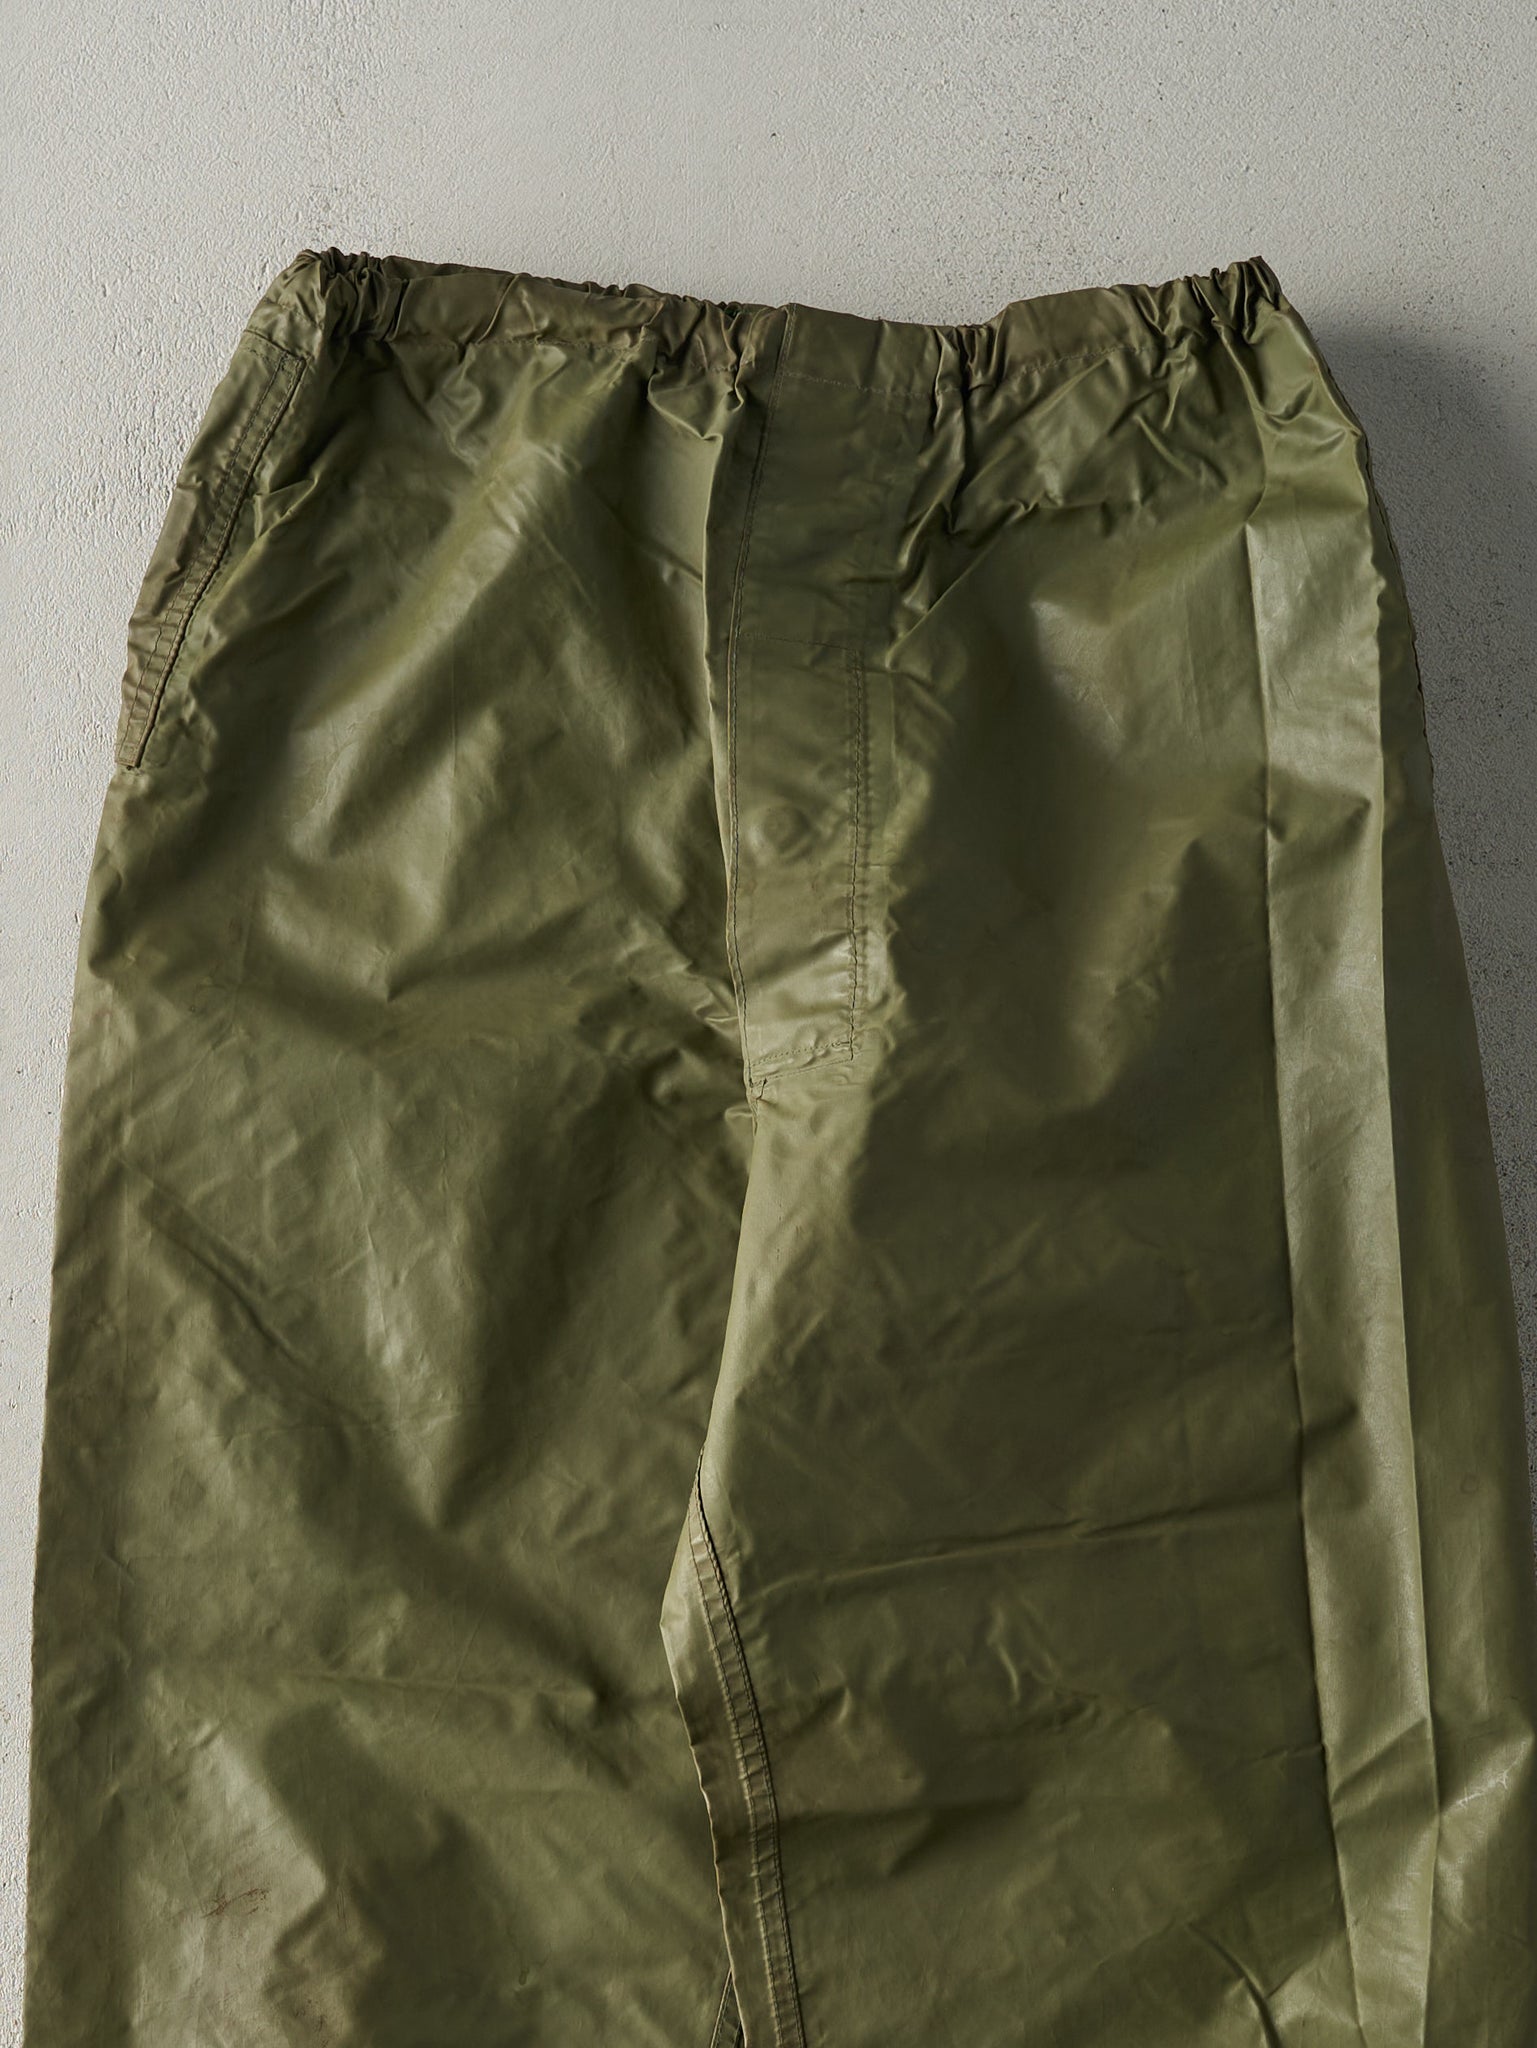 Vintage 96' Army Green Military Rain Pants (32x28)